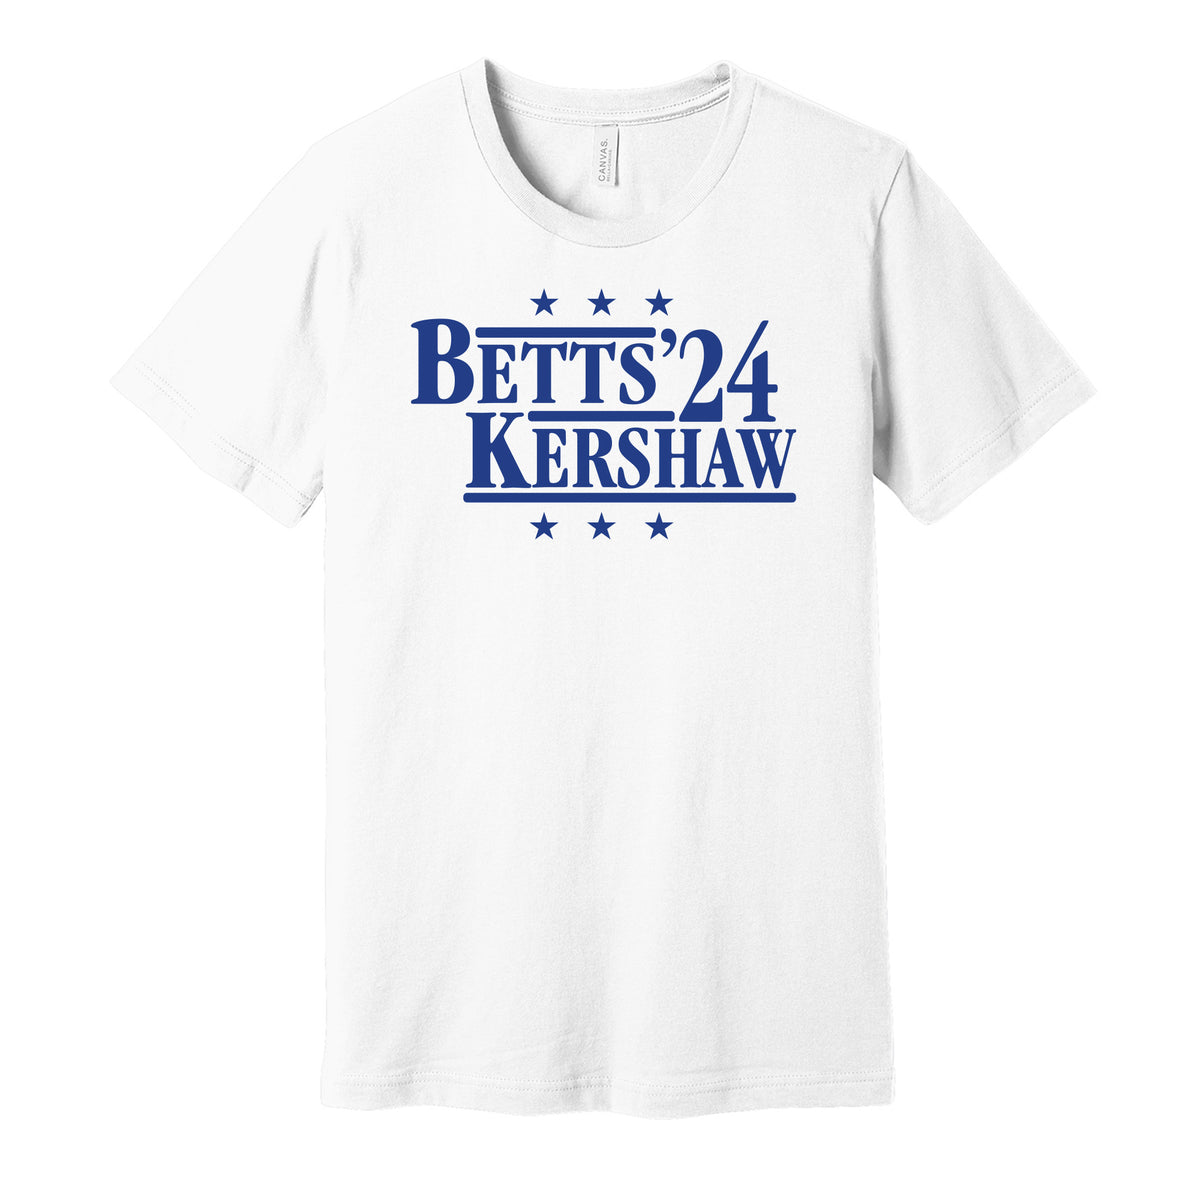 Betts & Kershaw '24 - Los Angeles Political Campaign Parody T-Shirt - Hyper Than Hype Shirts XXL / Black Shirt